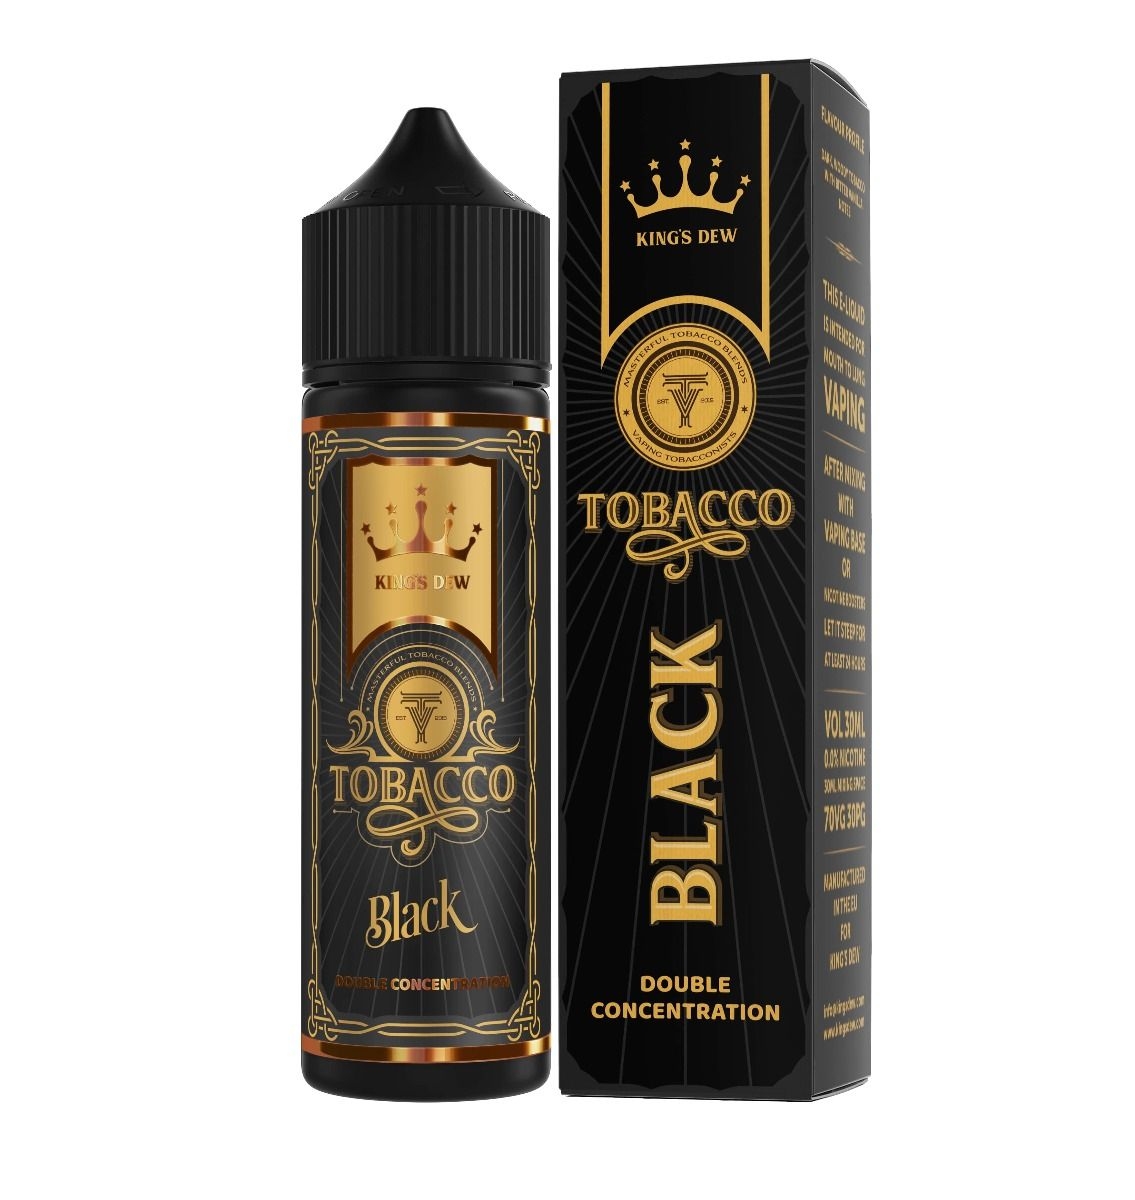 Lichid Tobacco Black (EN) Limited Edition 0mg 30ml King's Dew